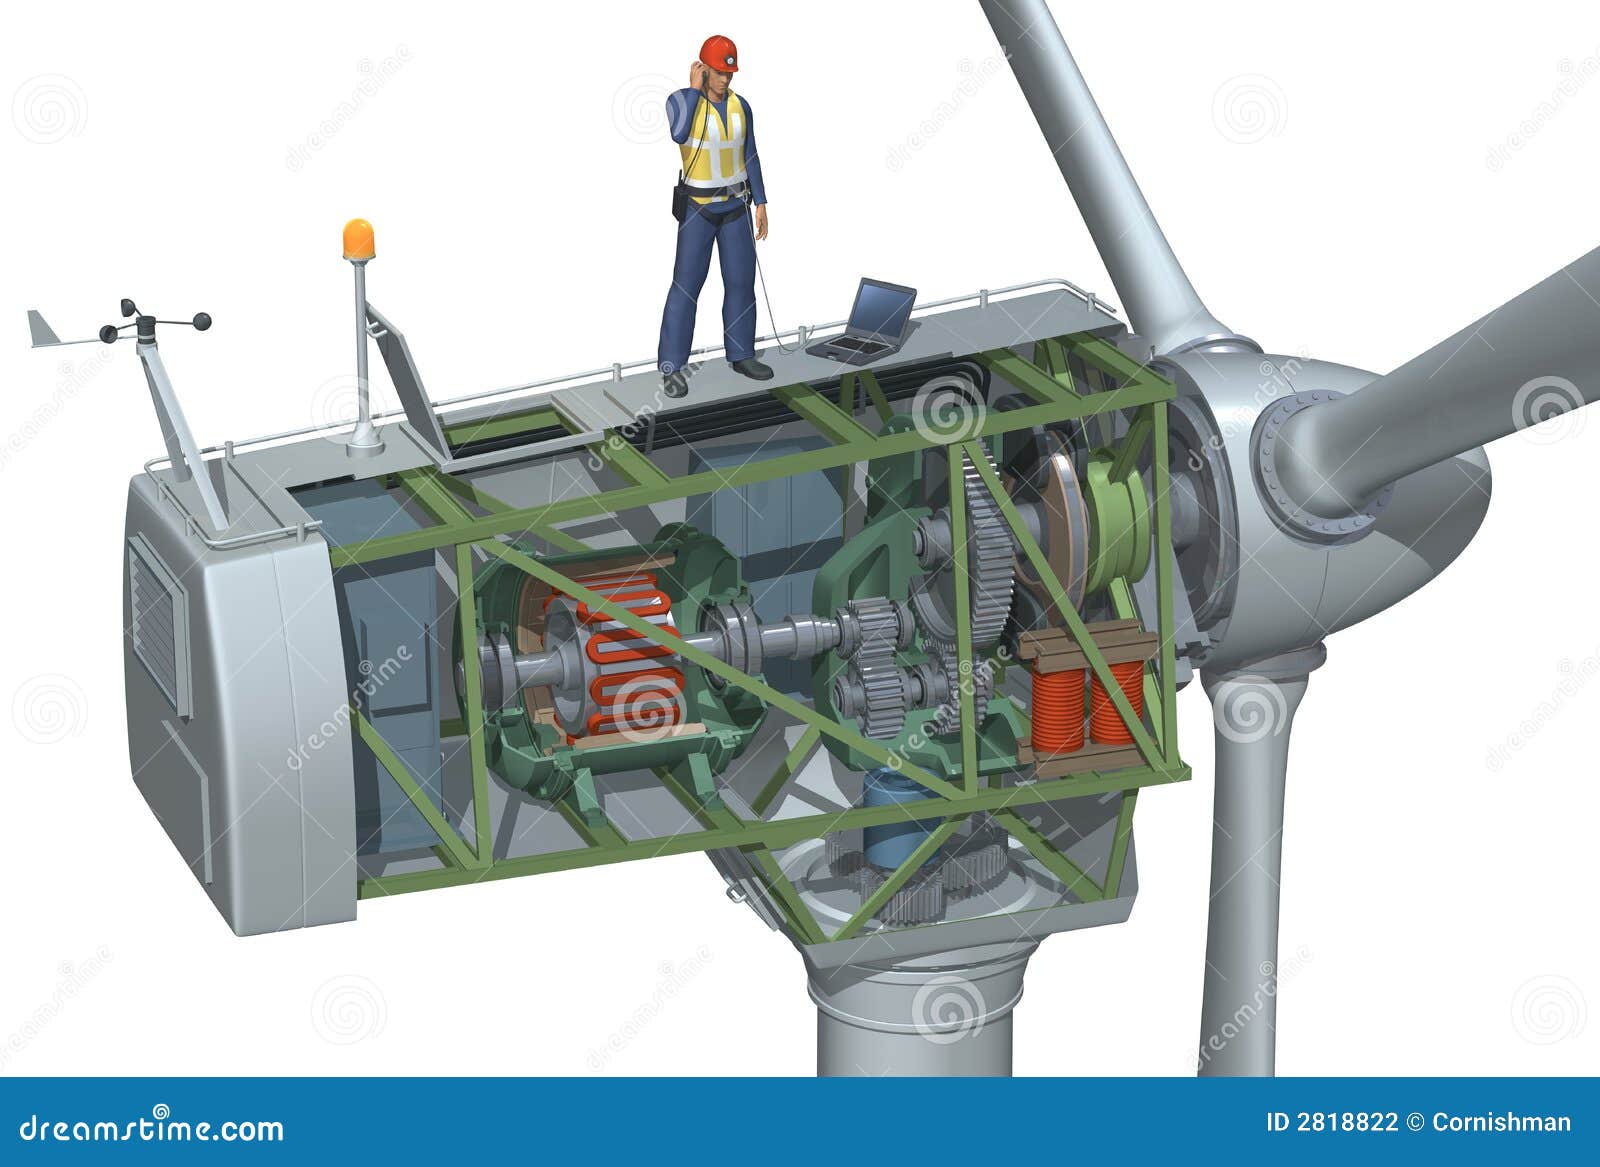 wind turbine cutaway